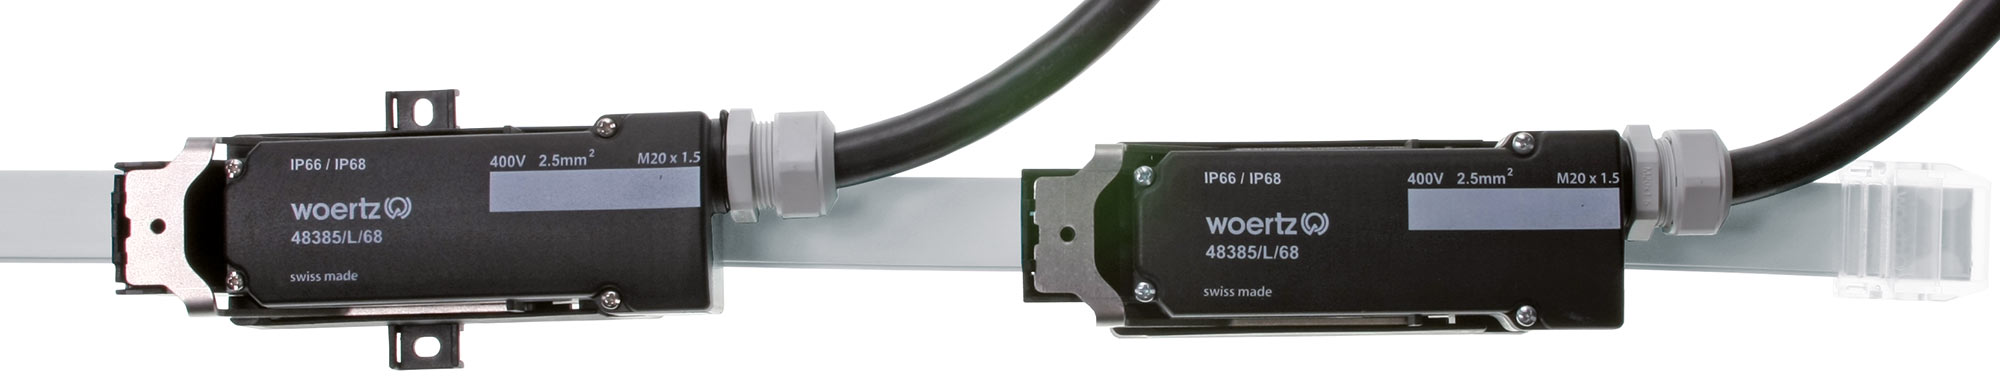 Sistema de cable plano Power IP 5G6 mm² (IP66/68)